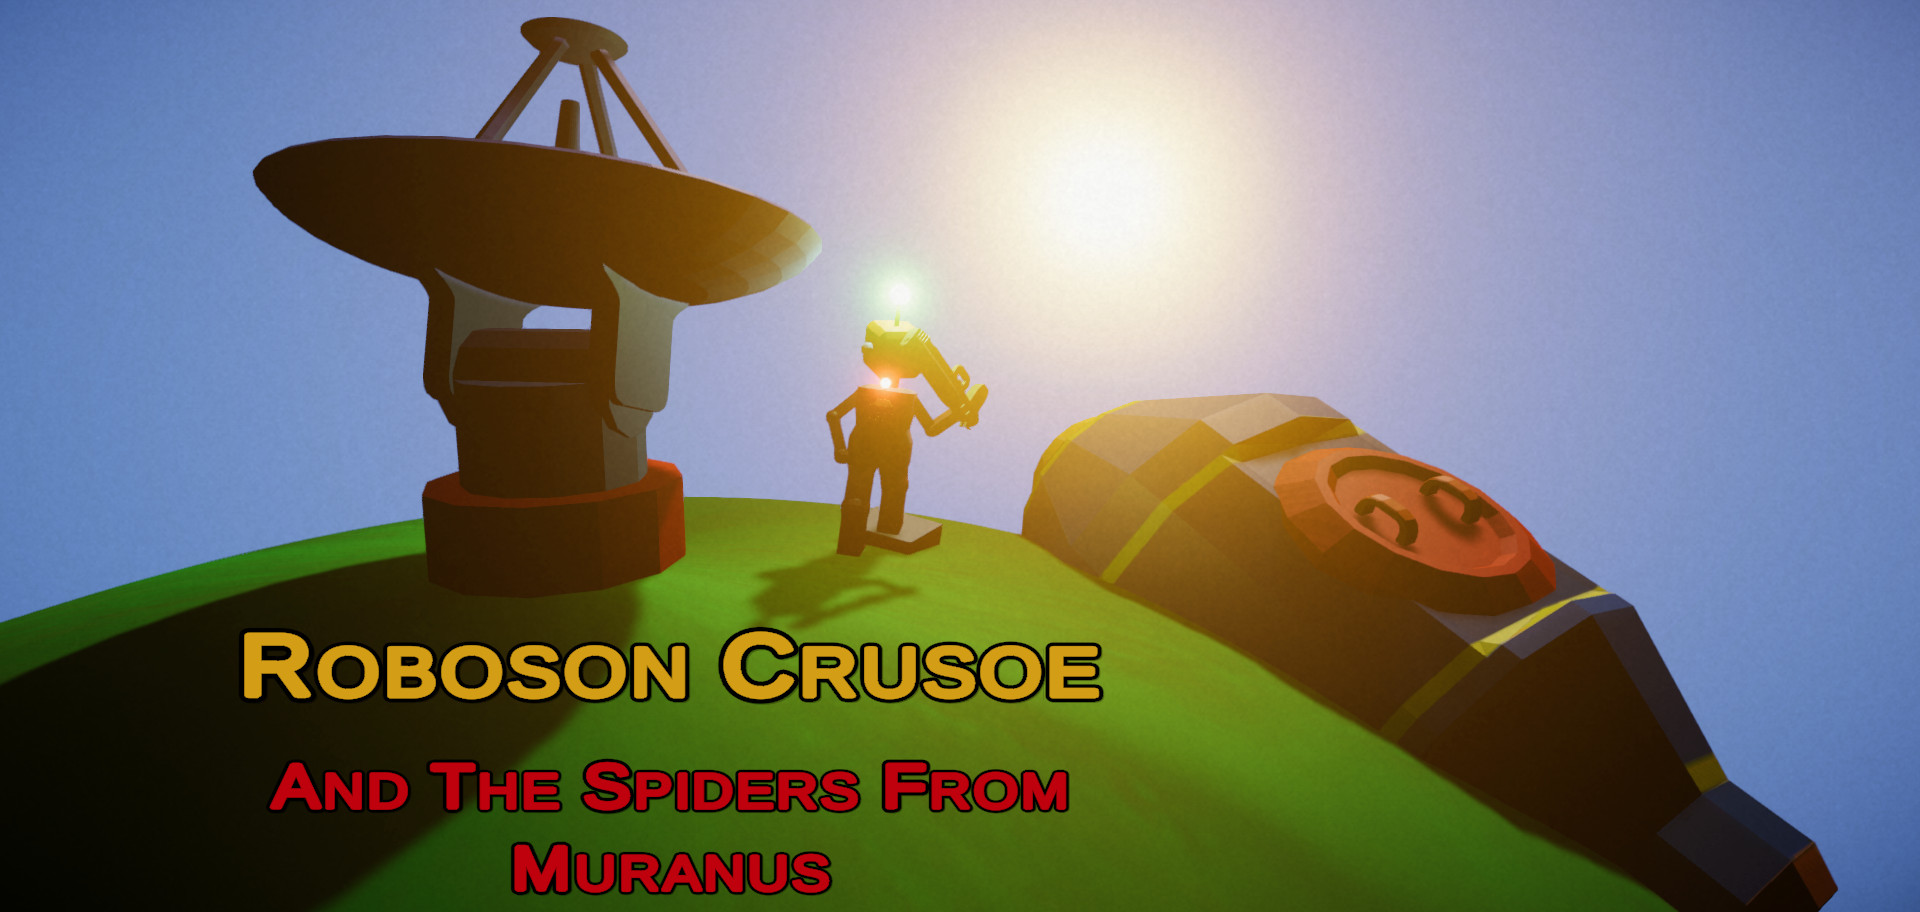 Roboson Crusoe and the Spiders from Muranus